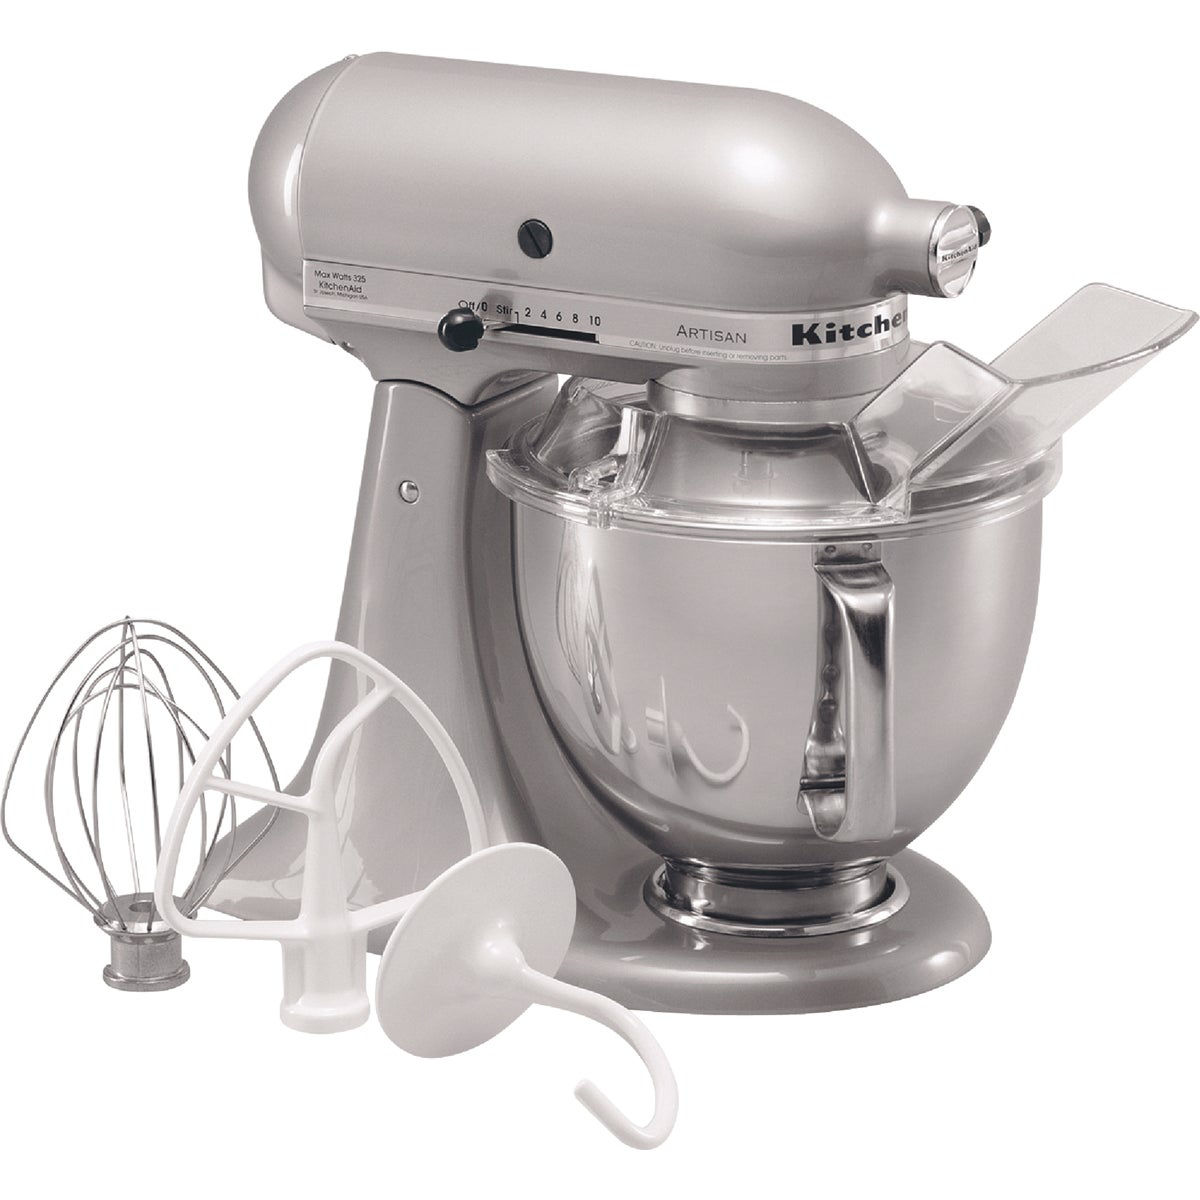 KitchenAid Artisan Series Stand Mixer - Milkshake for sale online